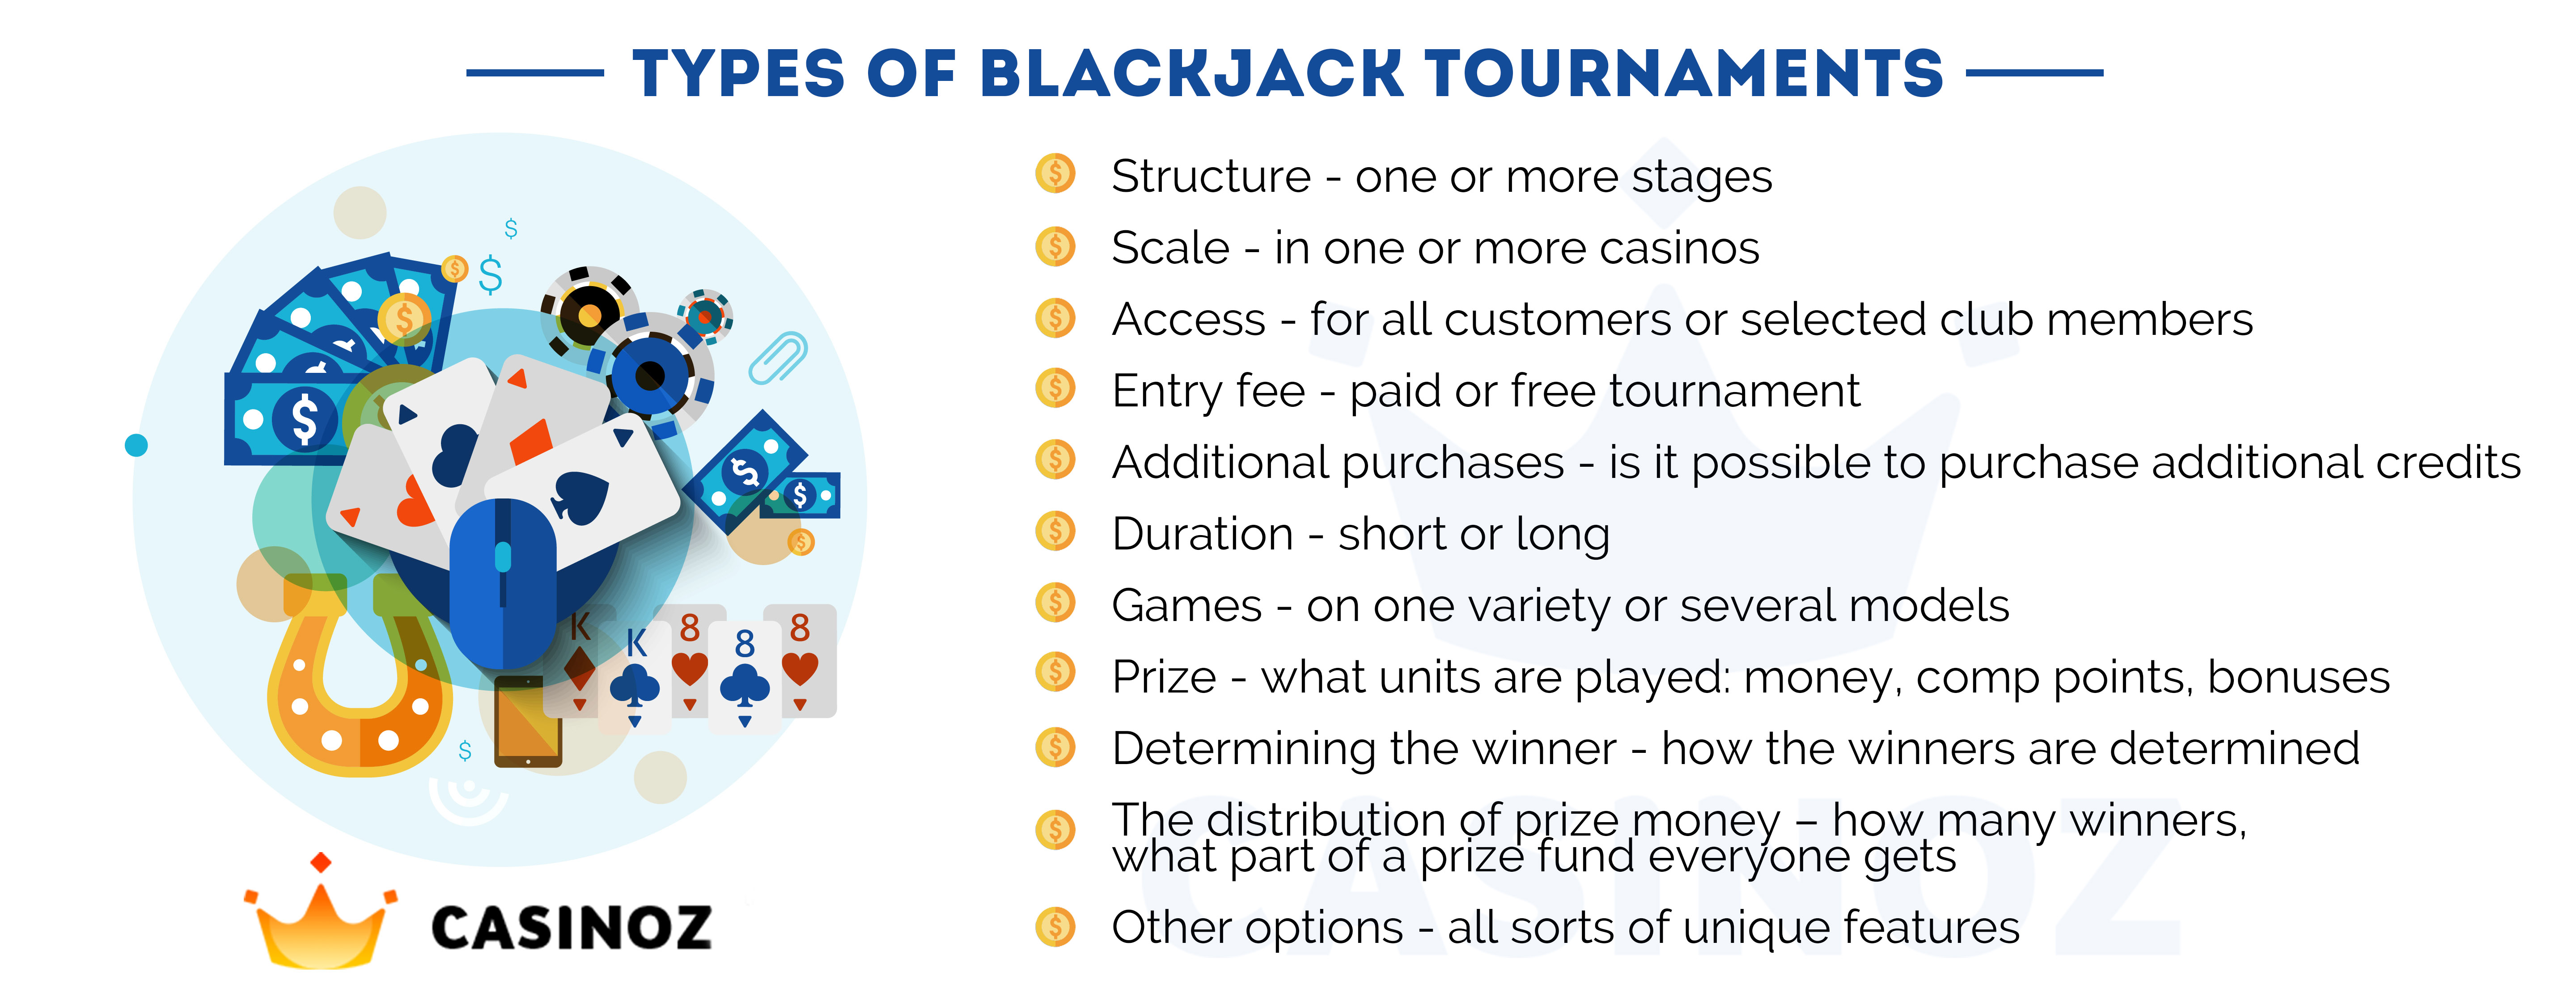 blackjack tournaments 2019